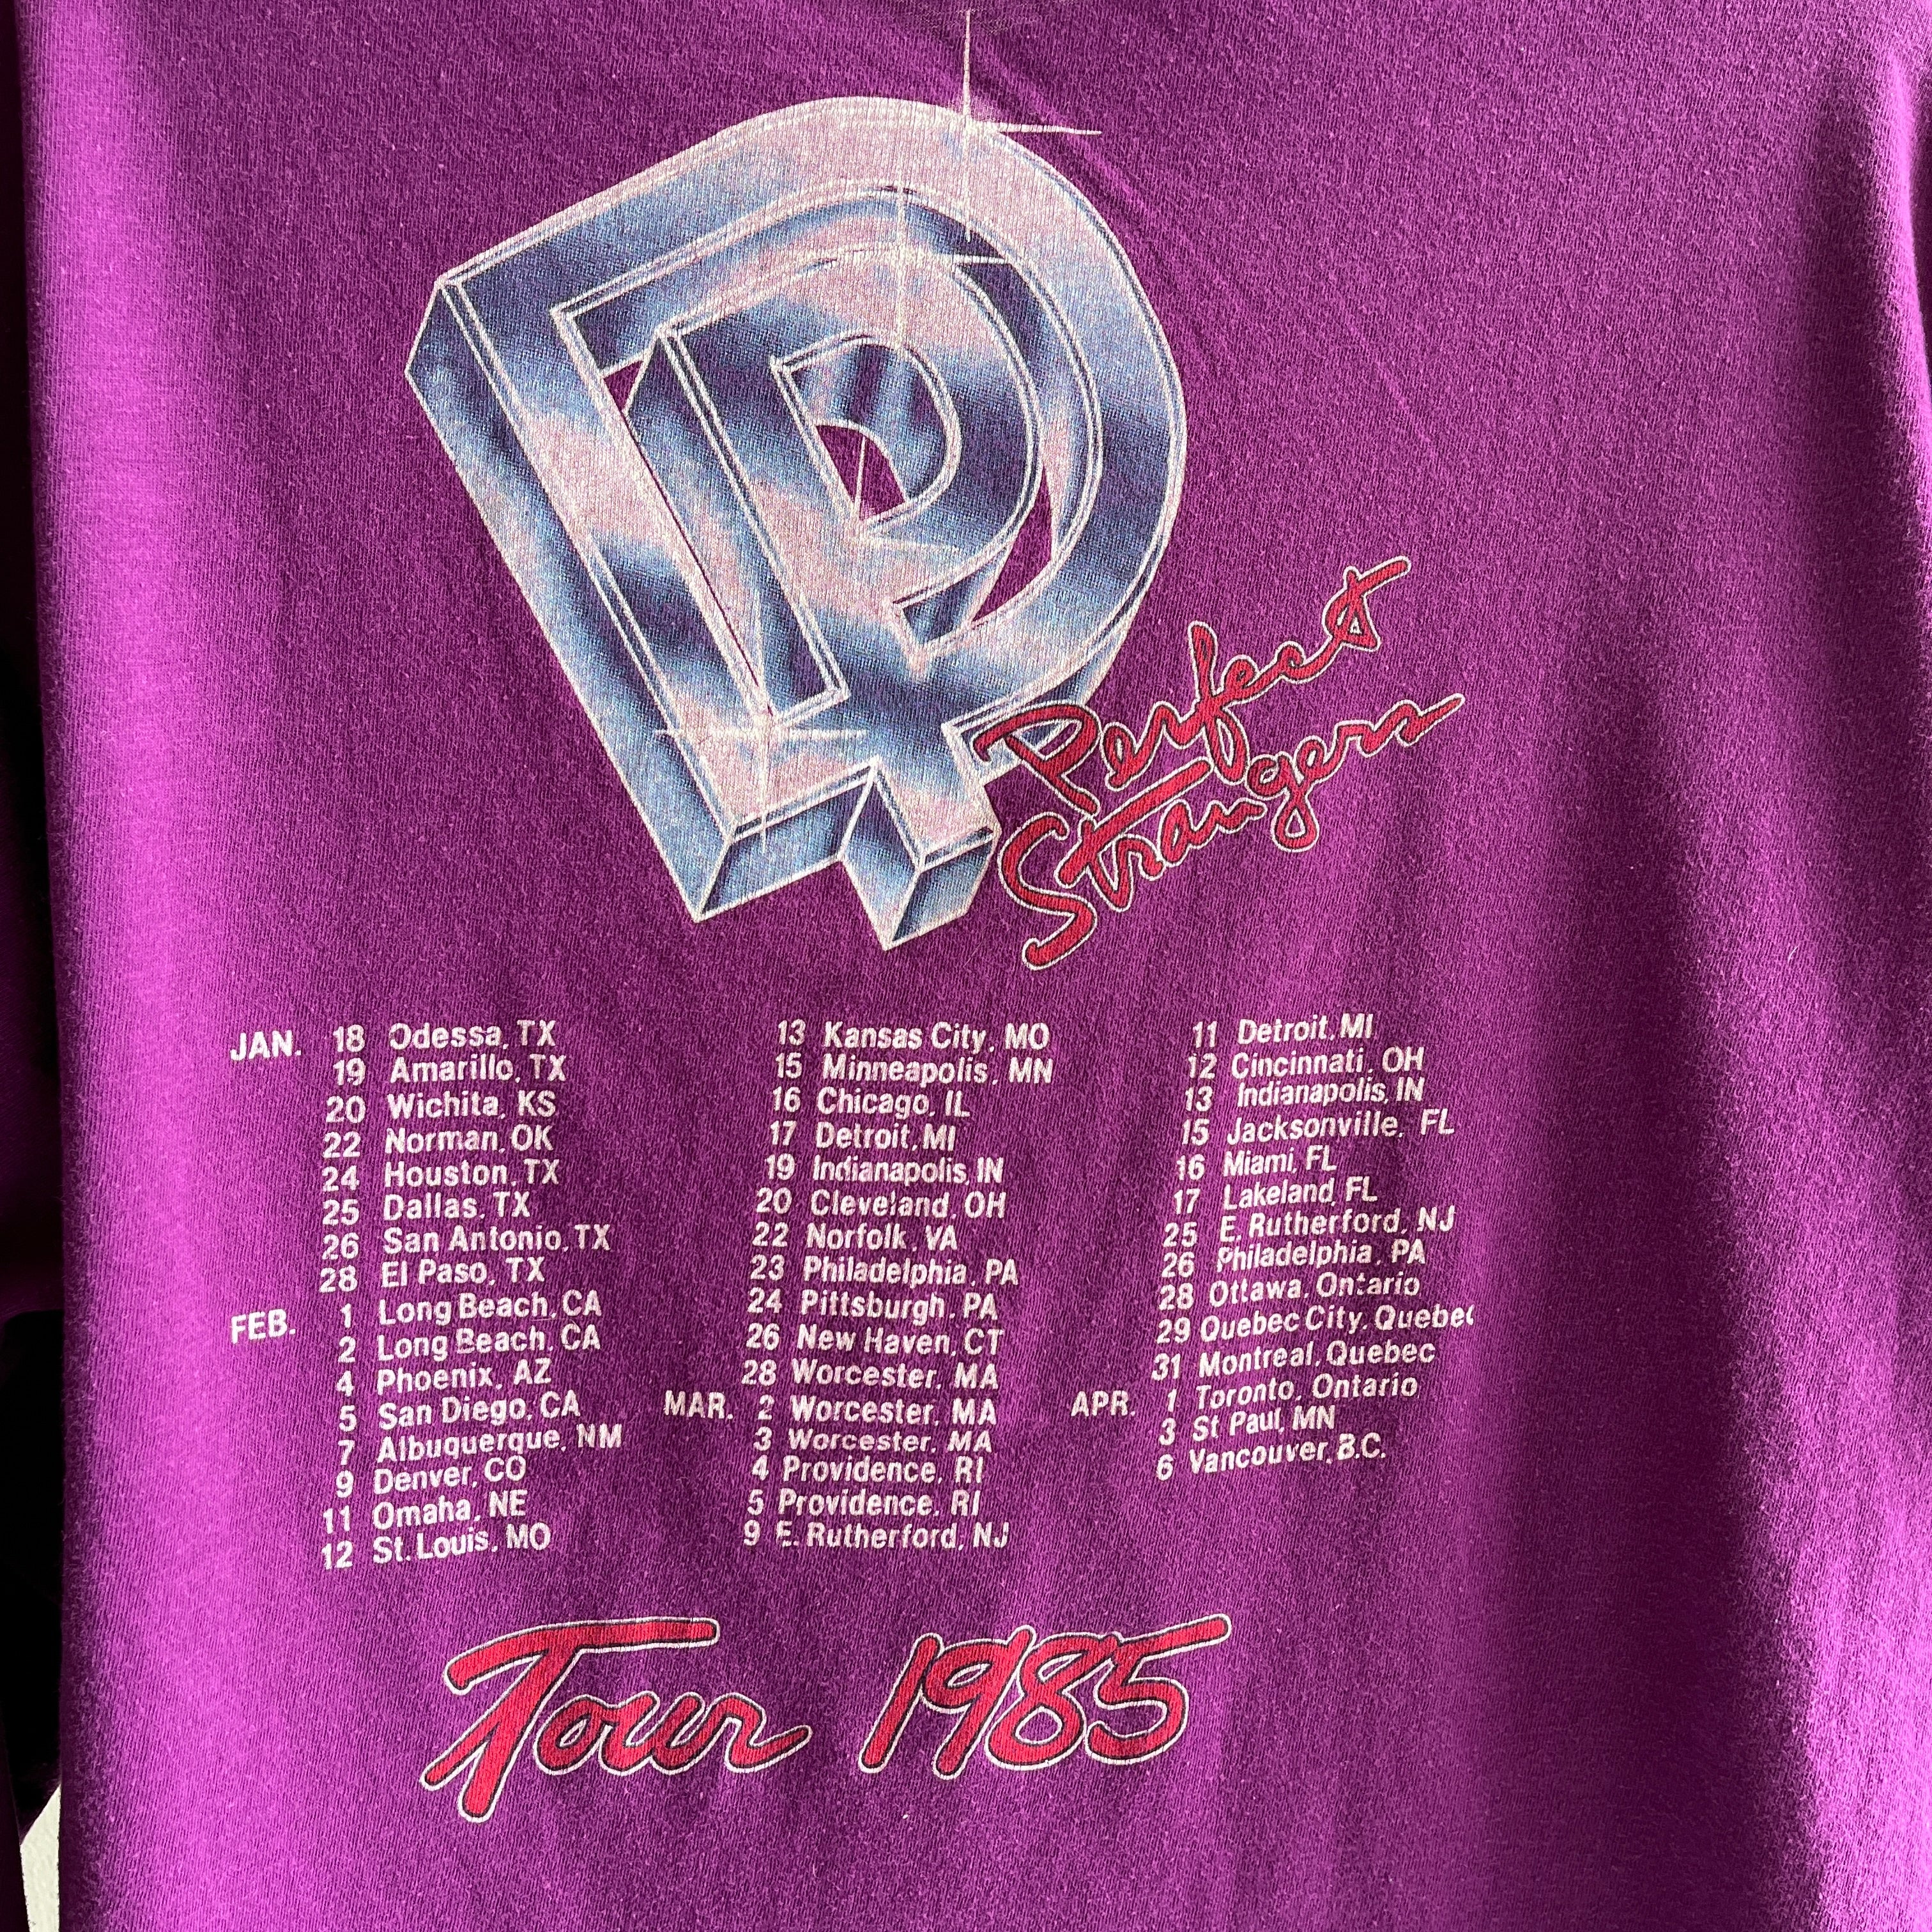 1985 Deep Purple USA MADE Long Sleeve Soft Cotton T-Shirt - OMFG!!!!